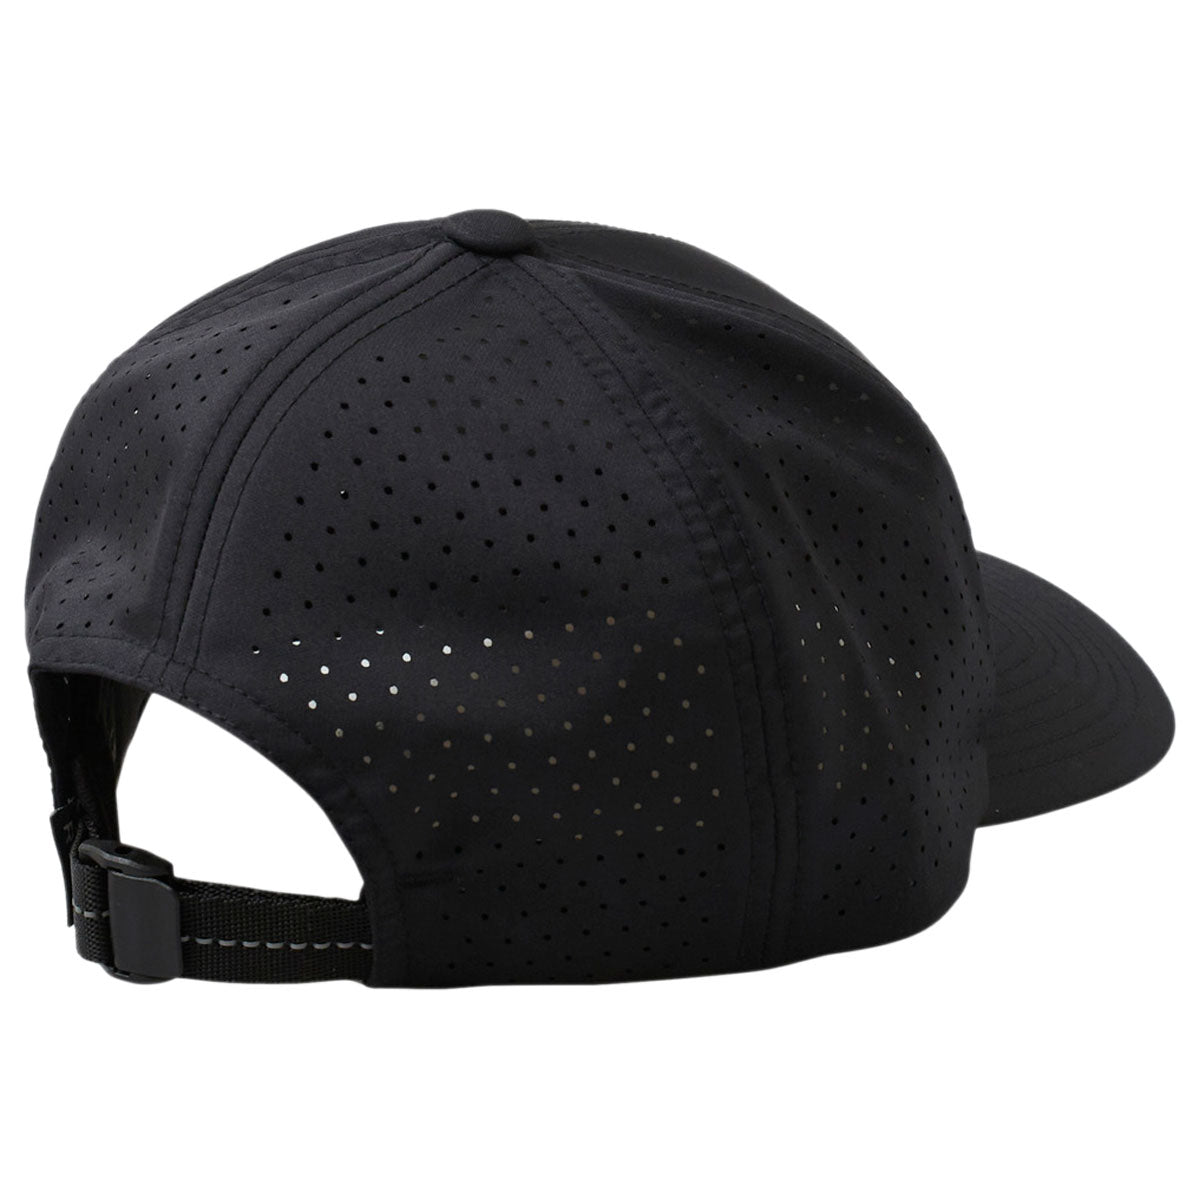 RVCA Vent II Hat - Black